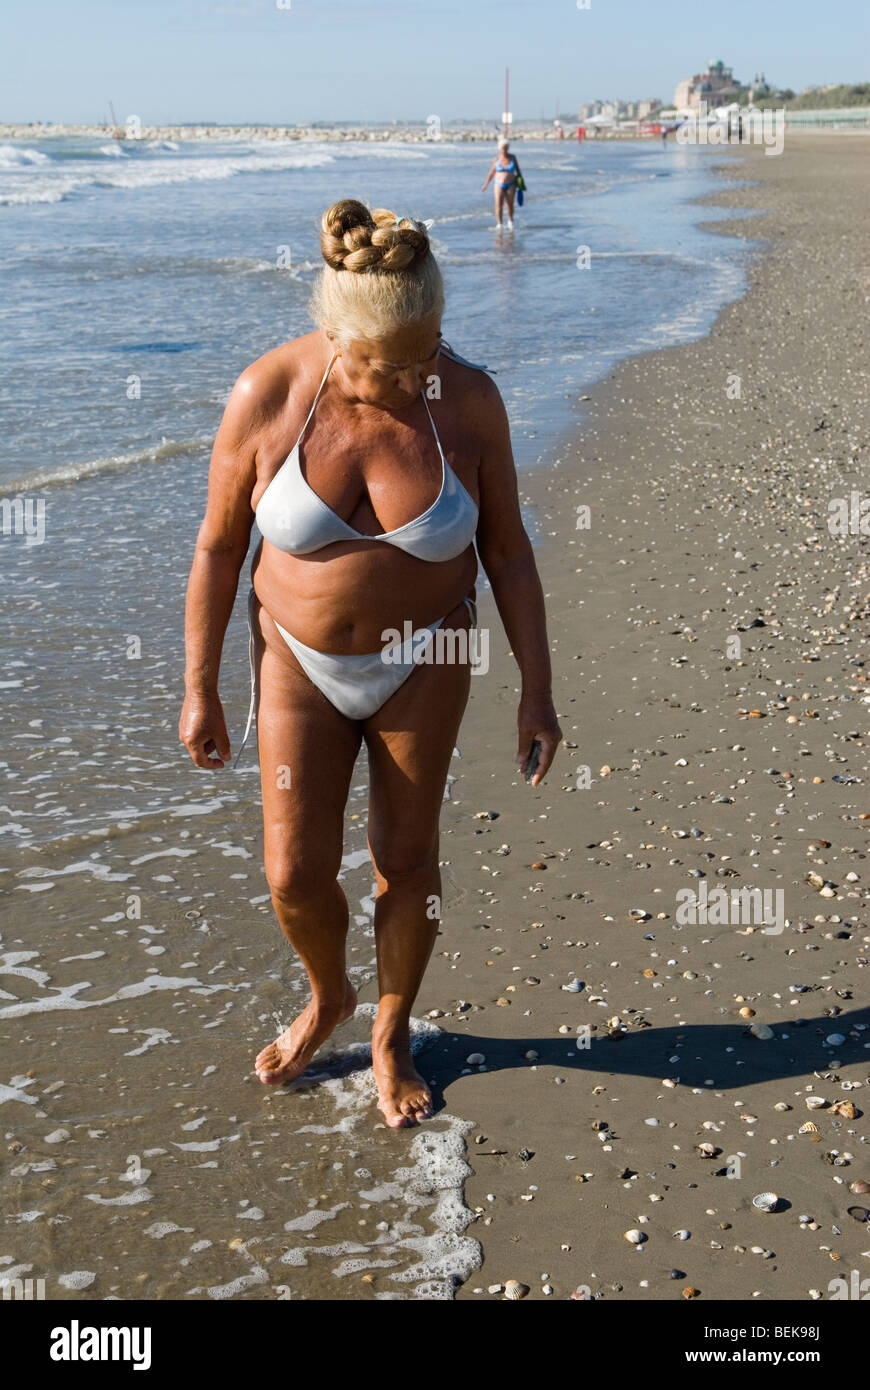 Gender fluid person mature senior androgynous woman man healthy fit body wearing white bikini Venice Lido beach Italy 2000s. 2009 HOMER SYKES Stock Photo